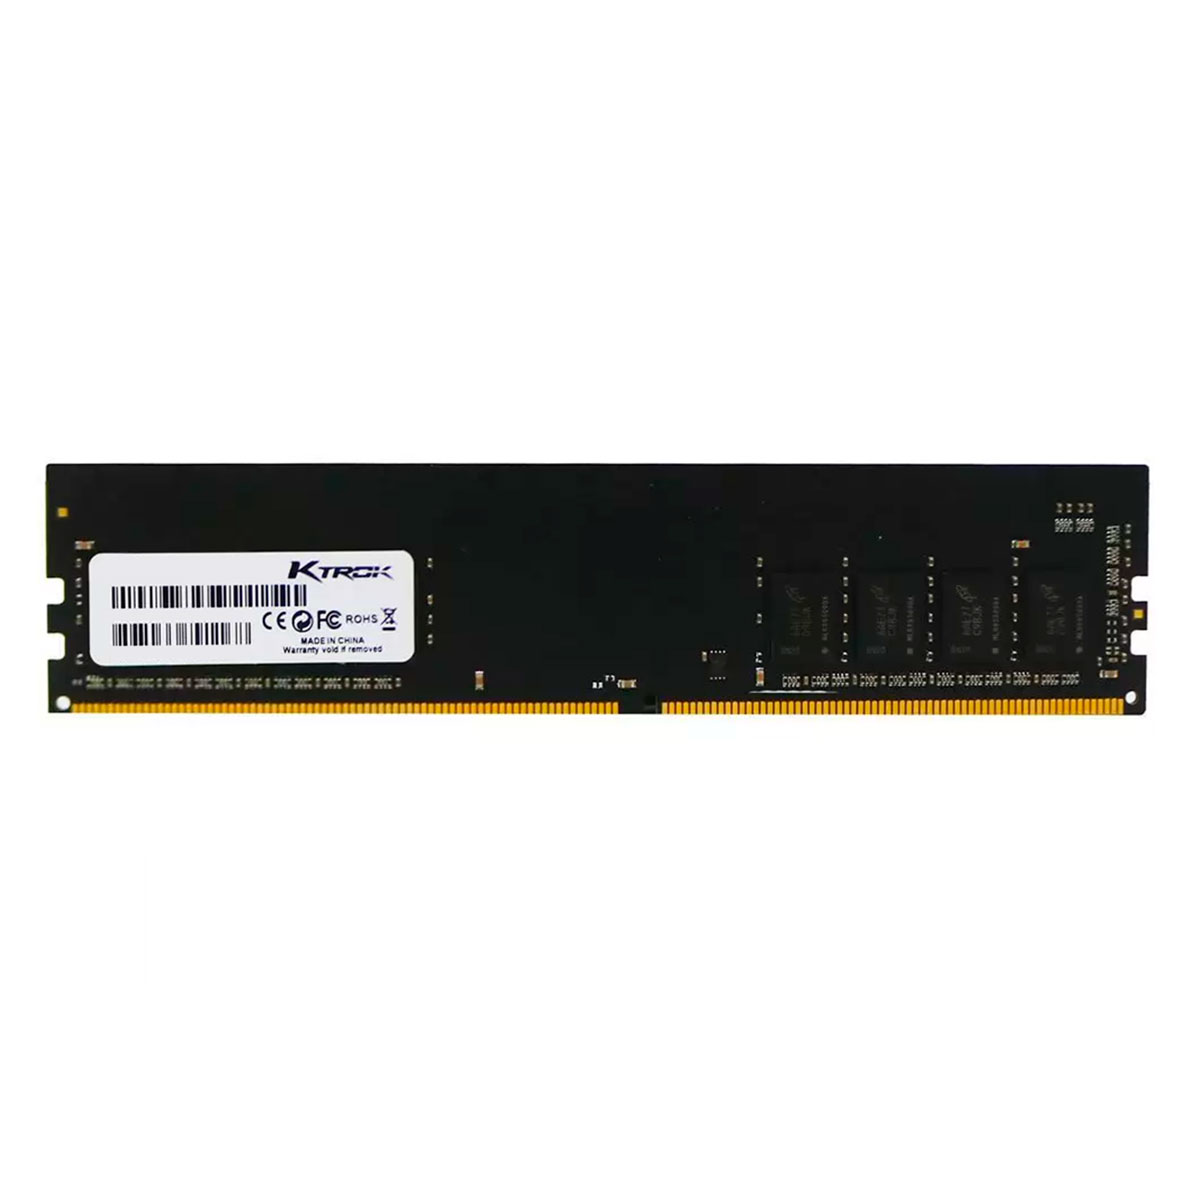 Memória 32GB DDR4 3200MHz K-trok - KT-MC32GD43200DT